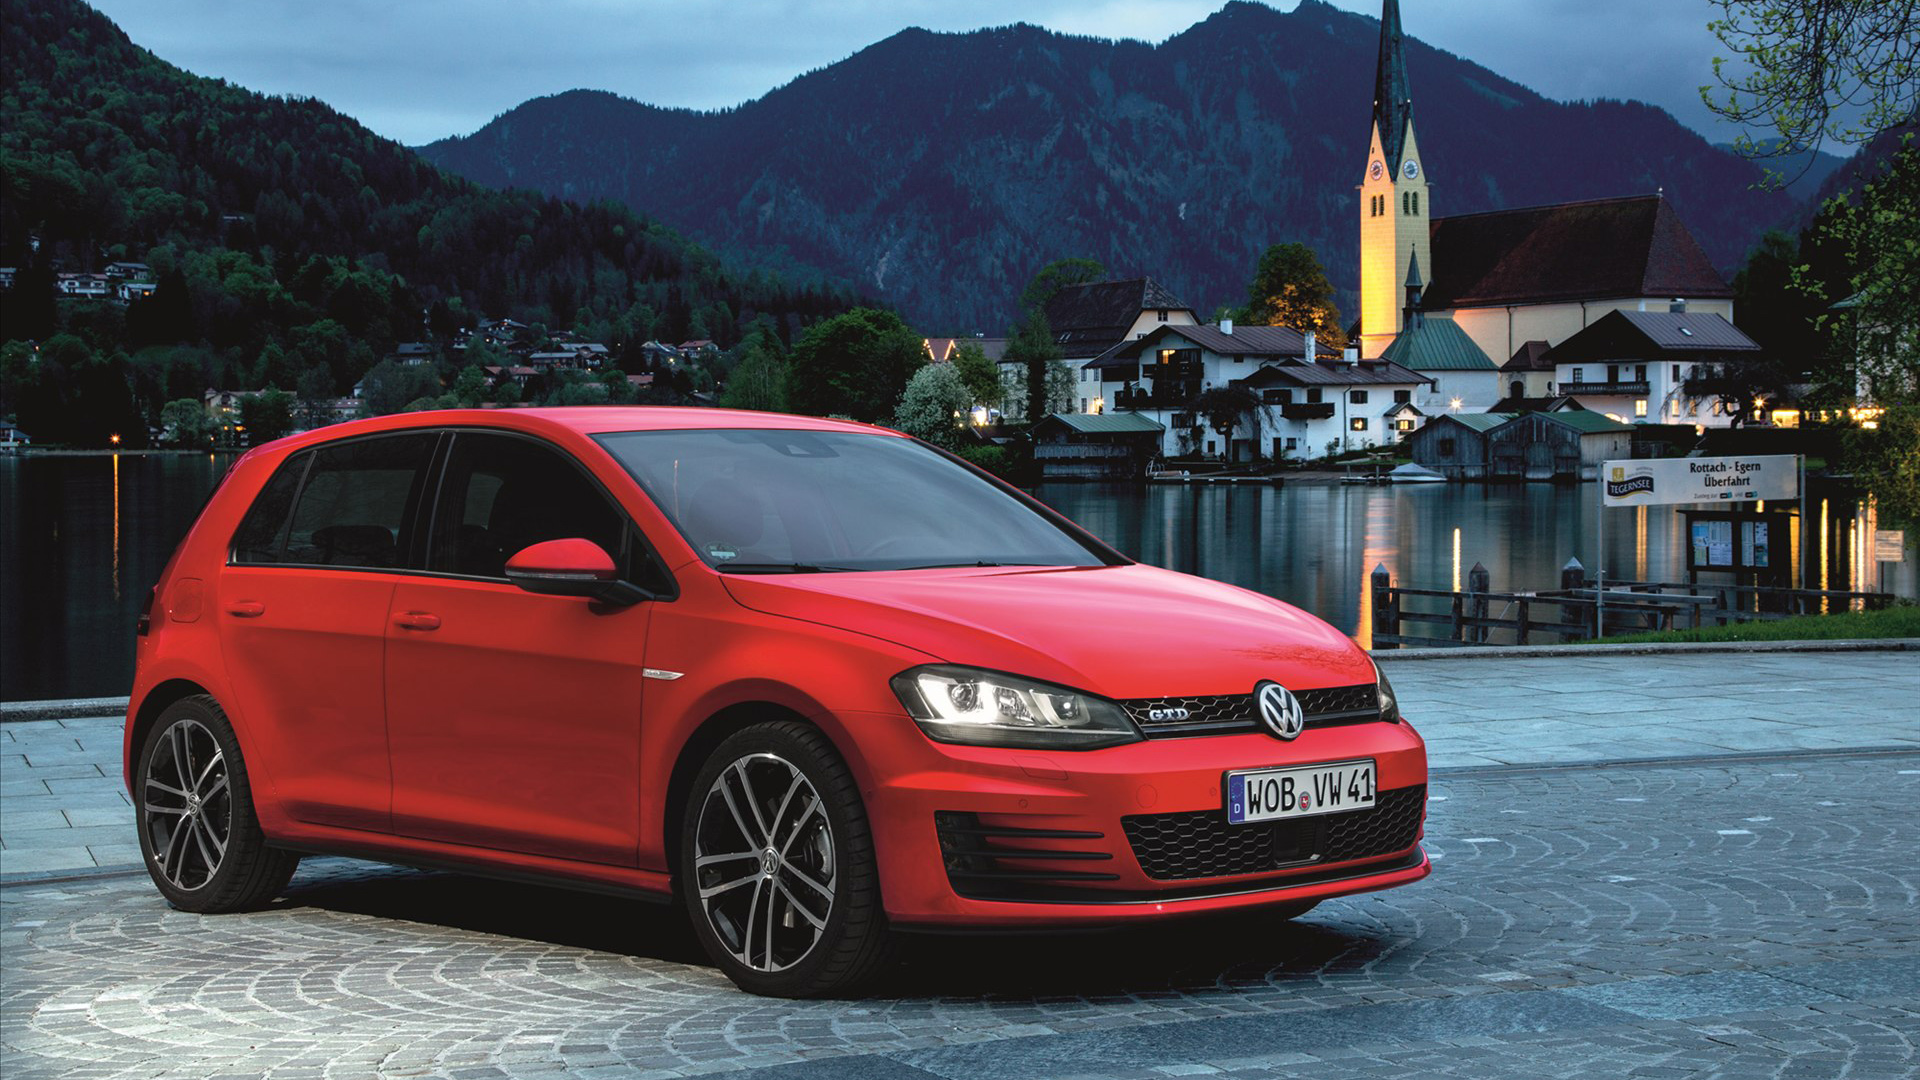 2014 Volkswagen Golf GTD Wallpaper | HD Car Wallpapers ...